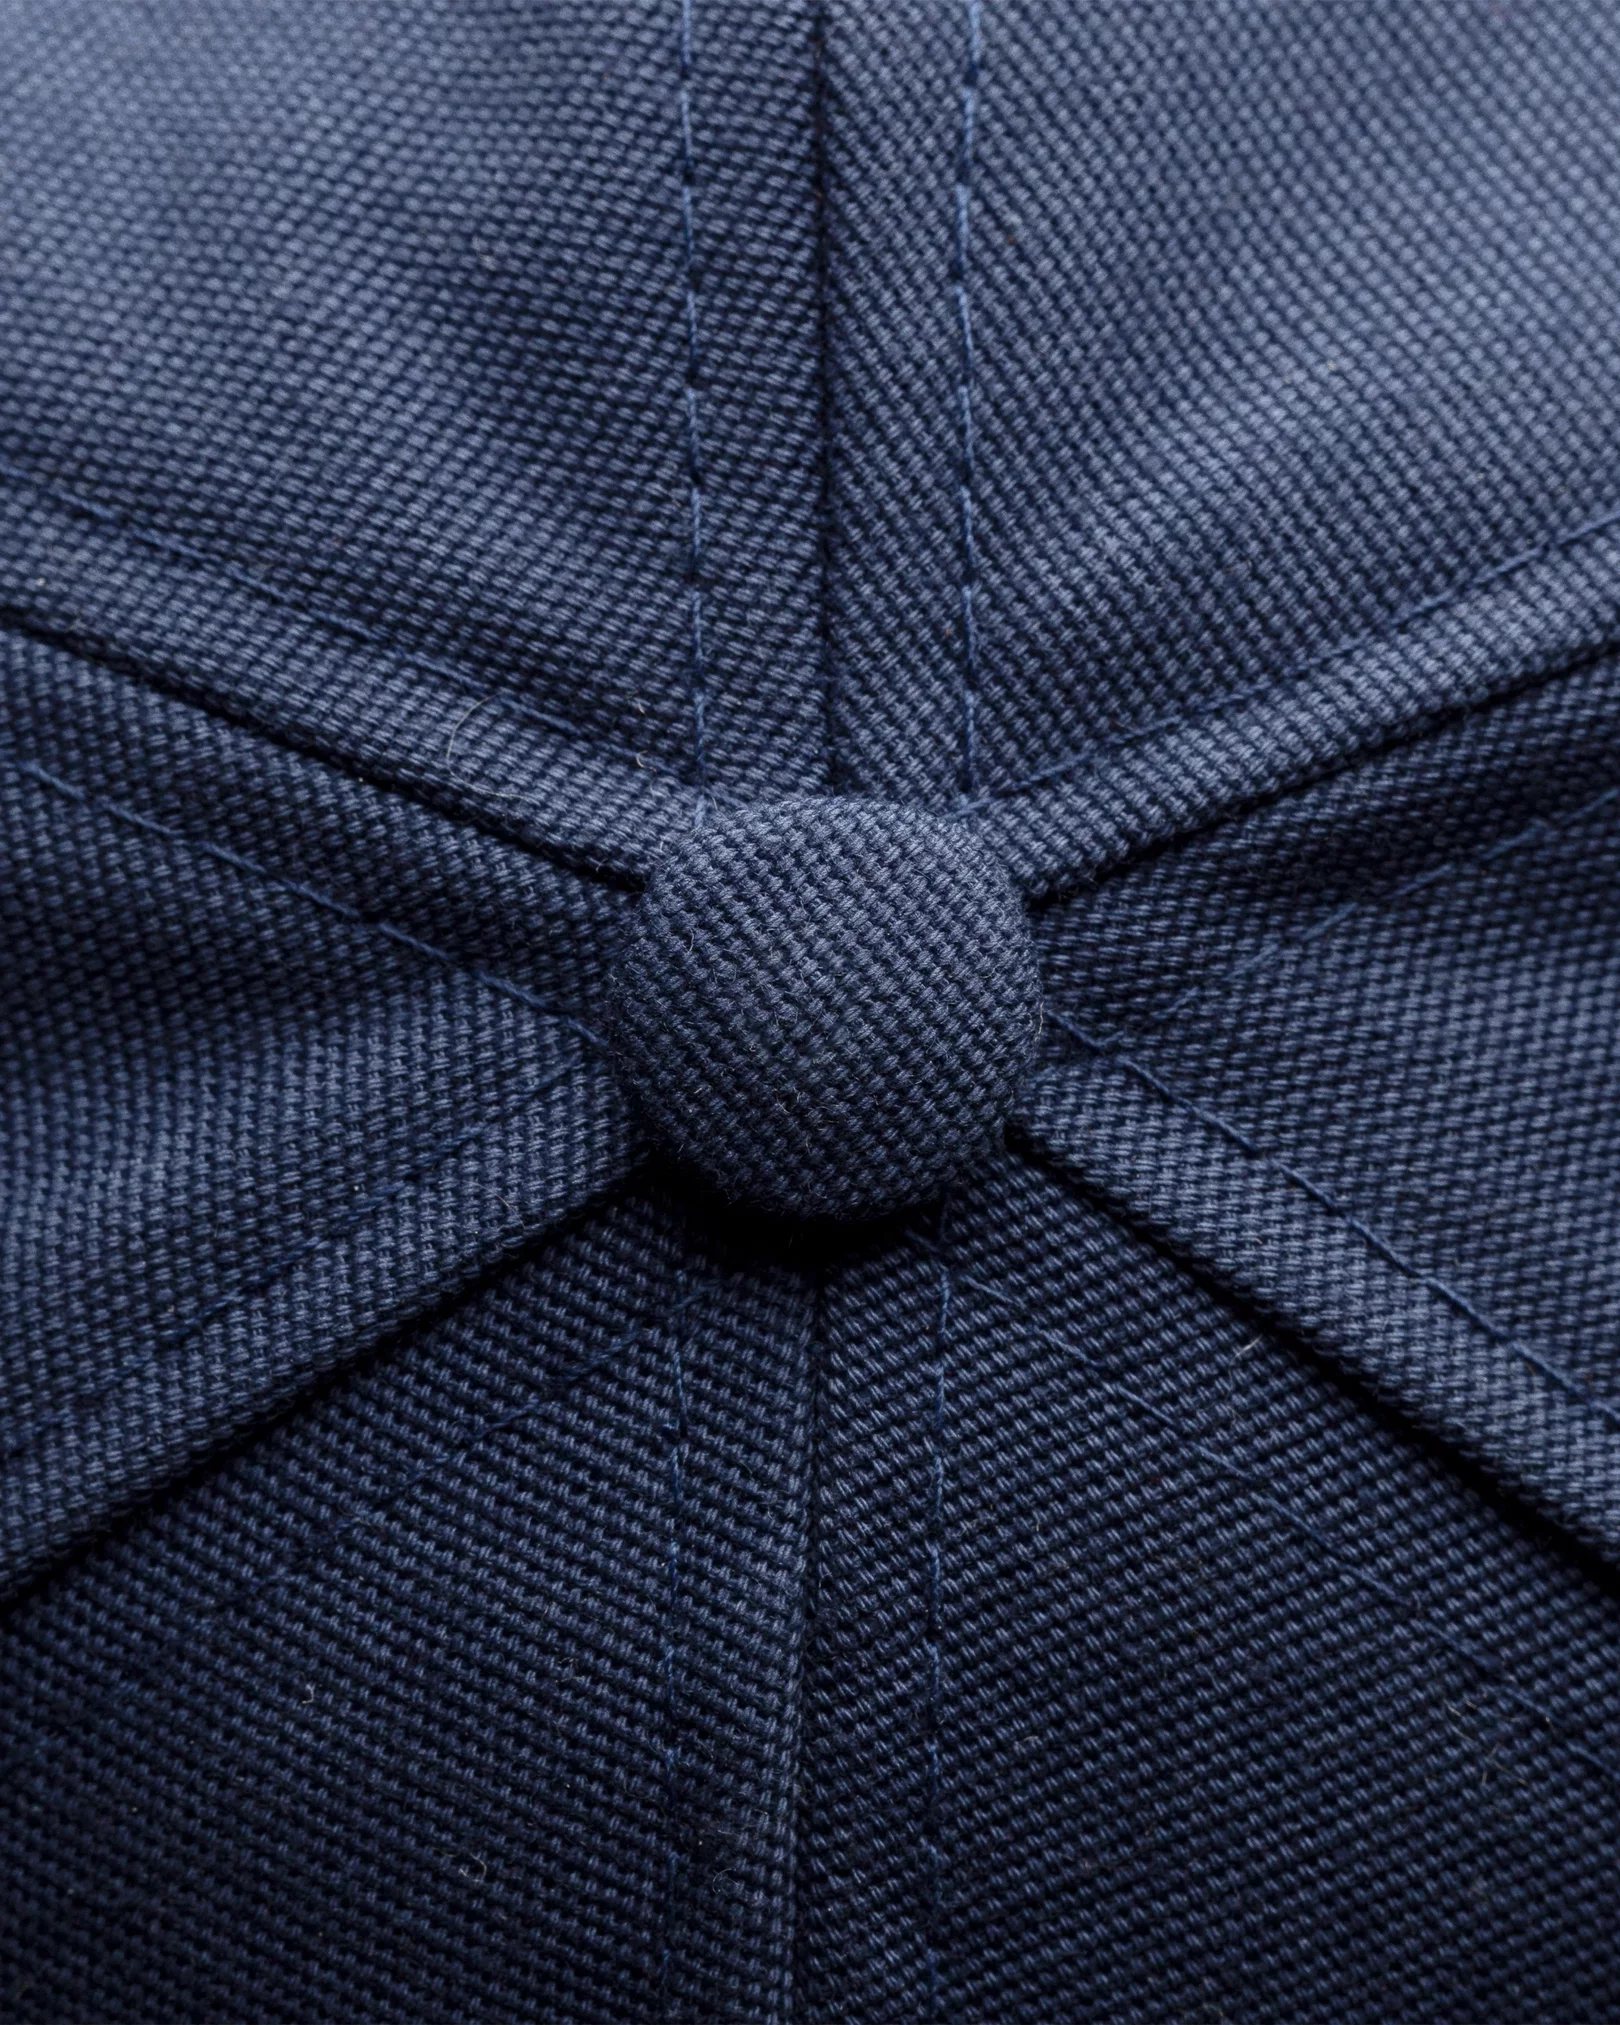 Eton - dark blue grosgrain cap